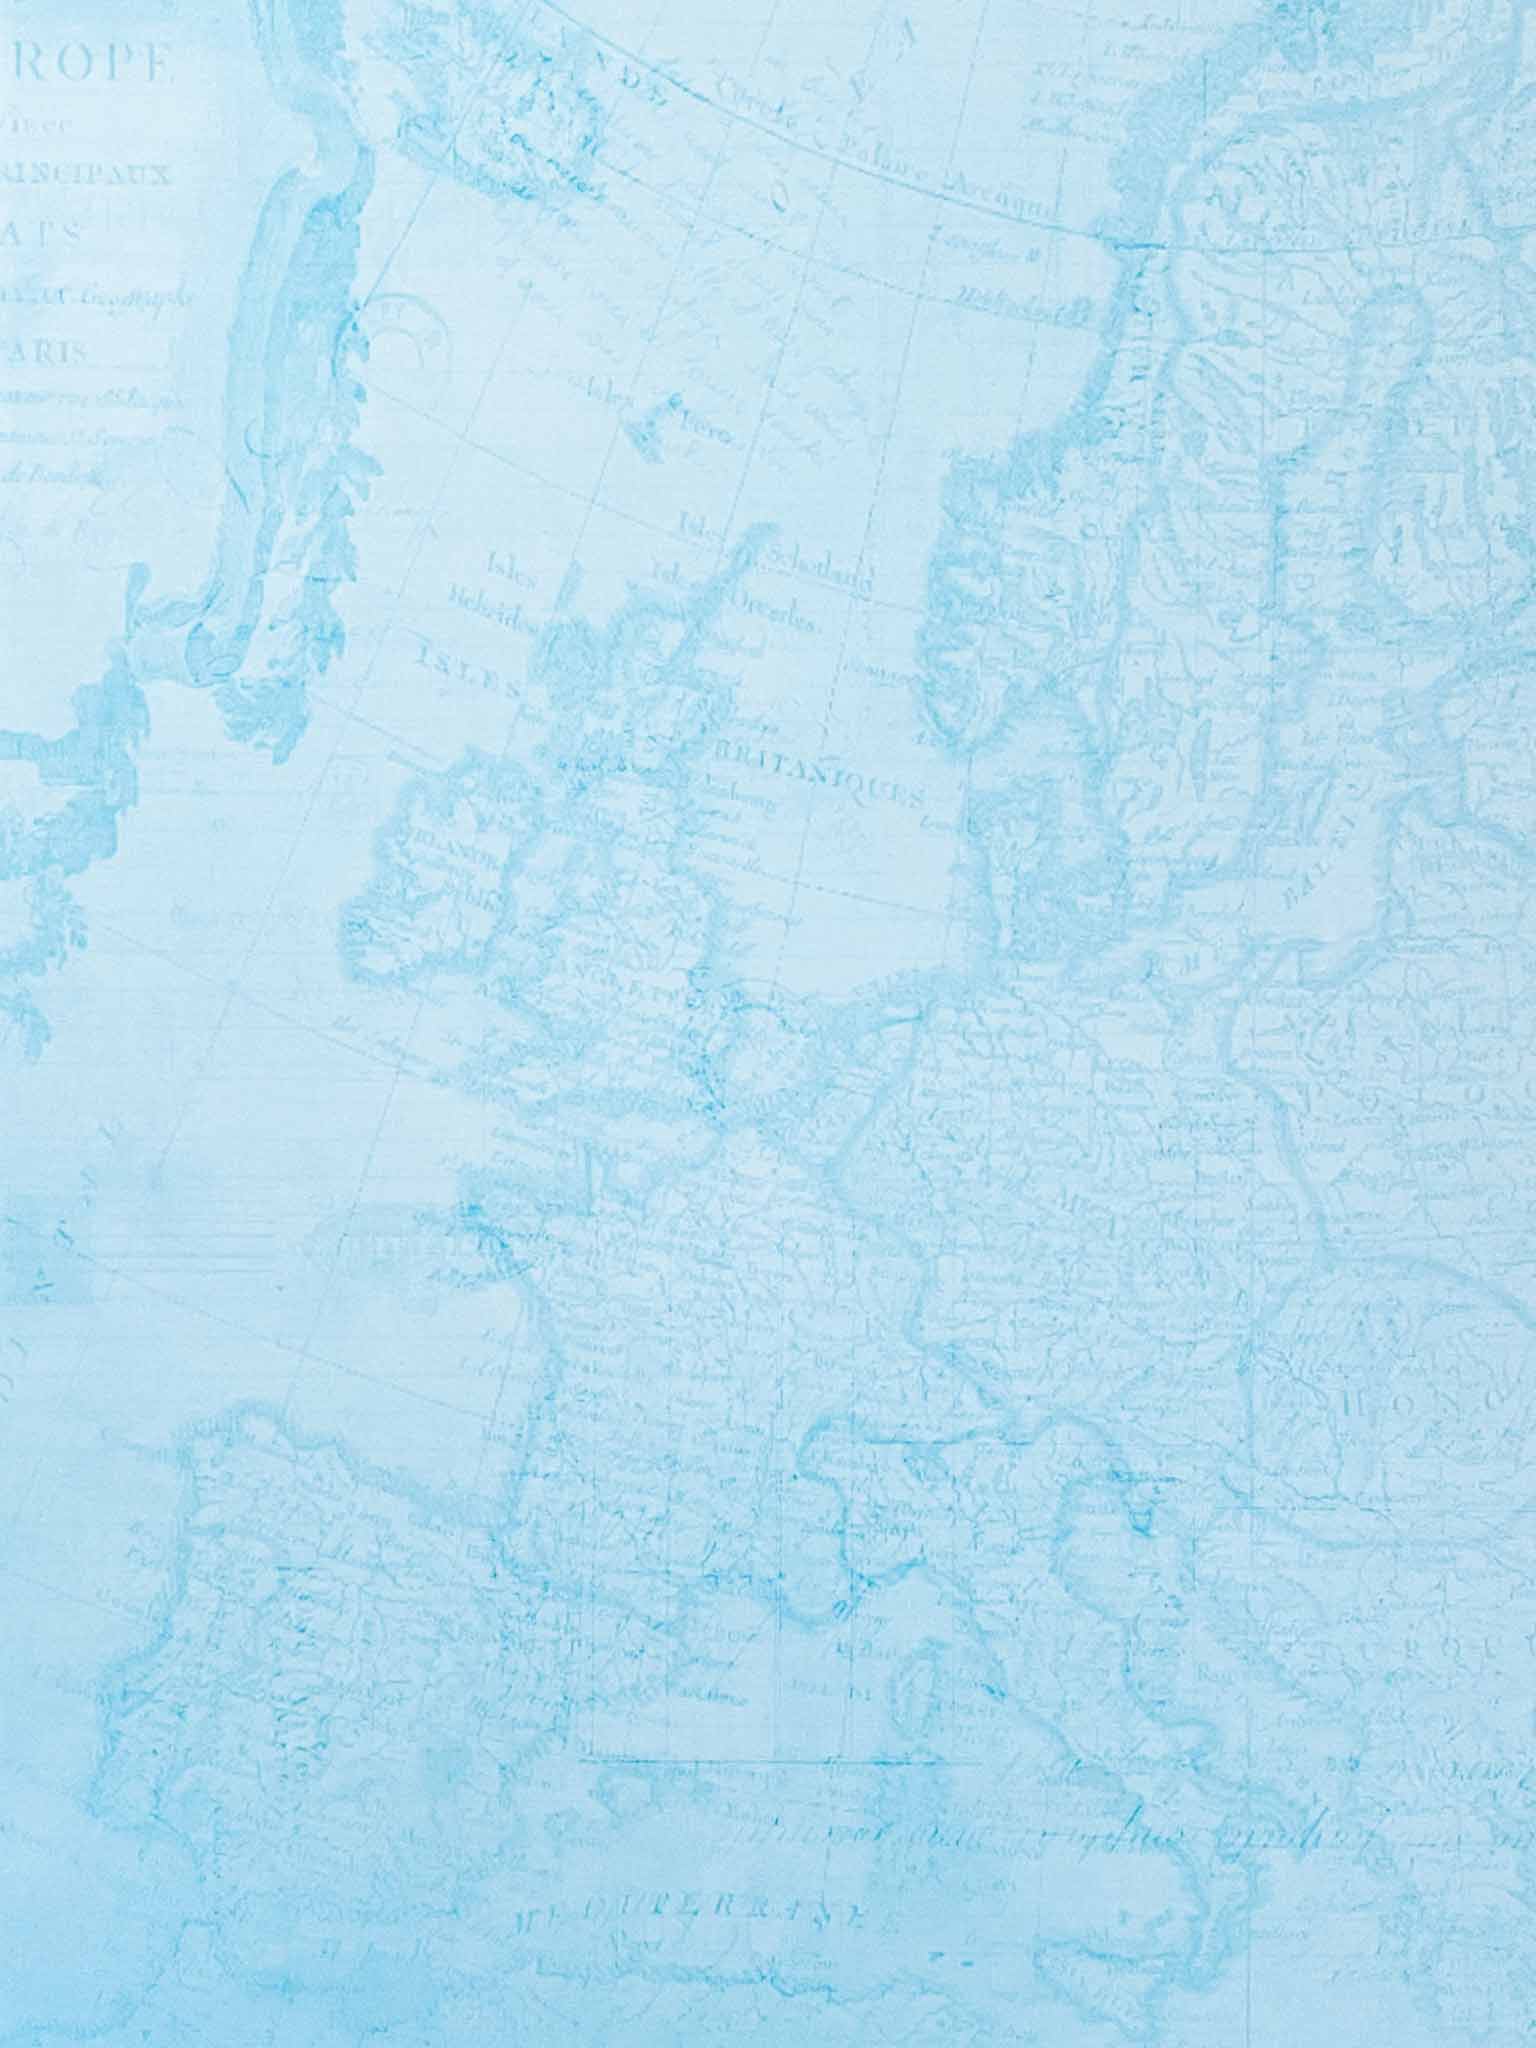 Francis Vintage Map in Blue  ImagineDIY   